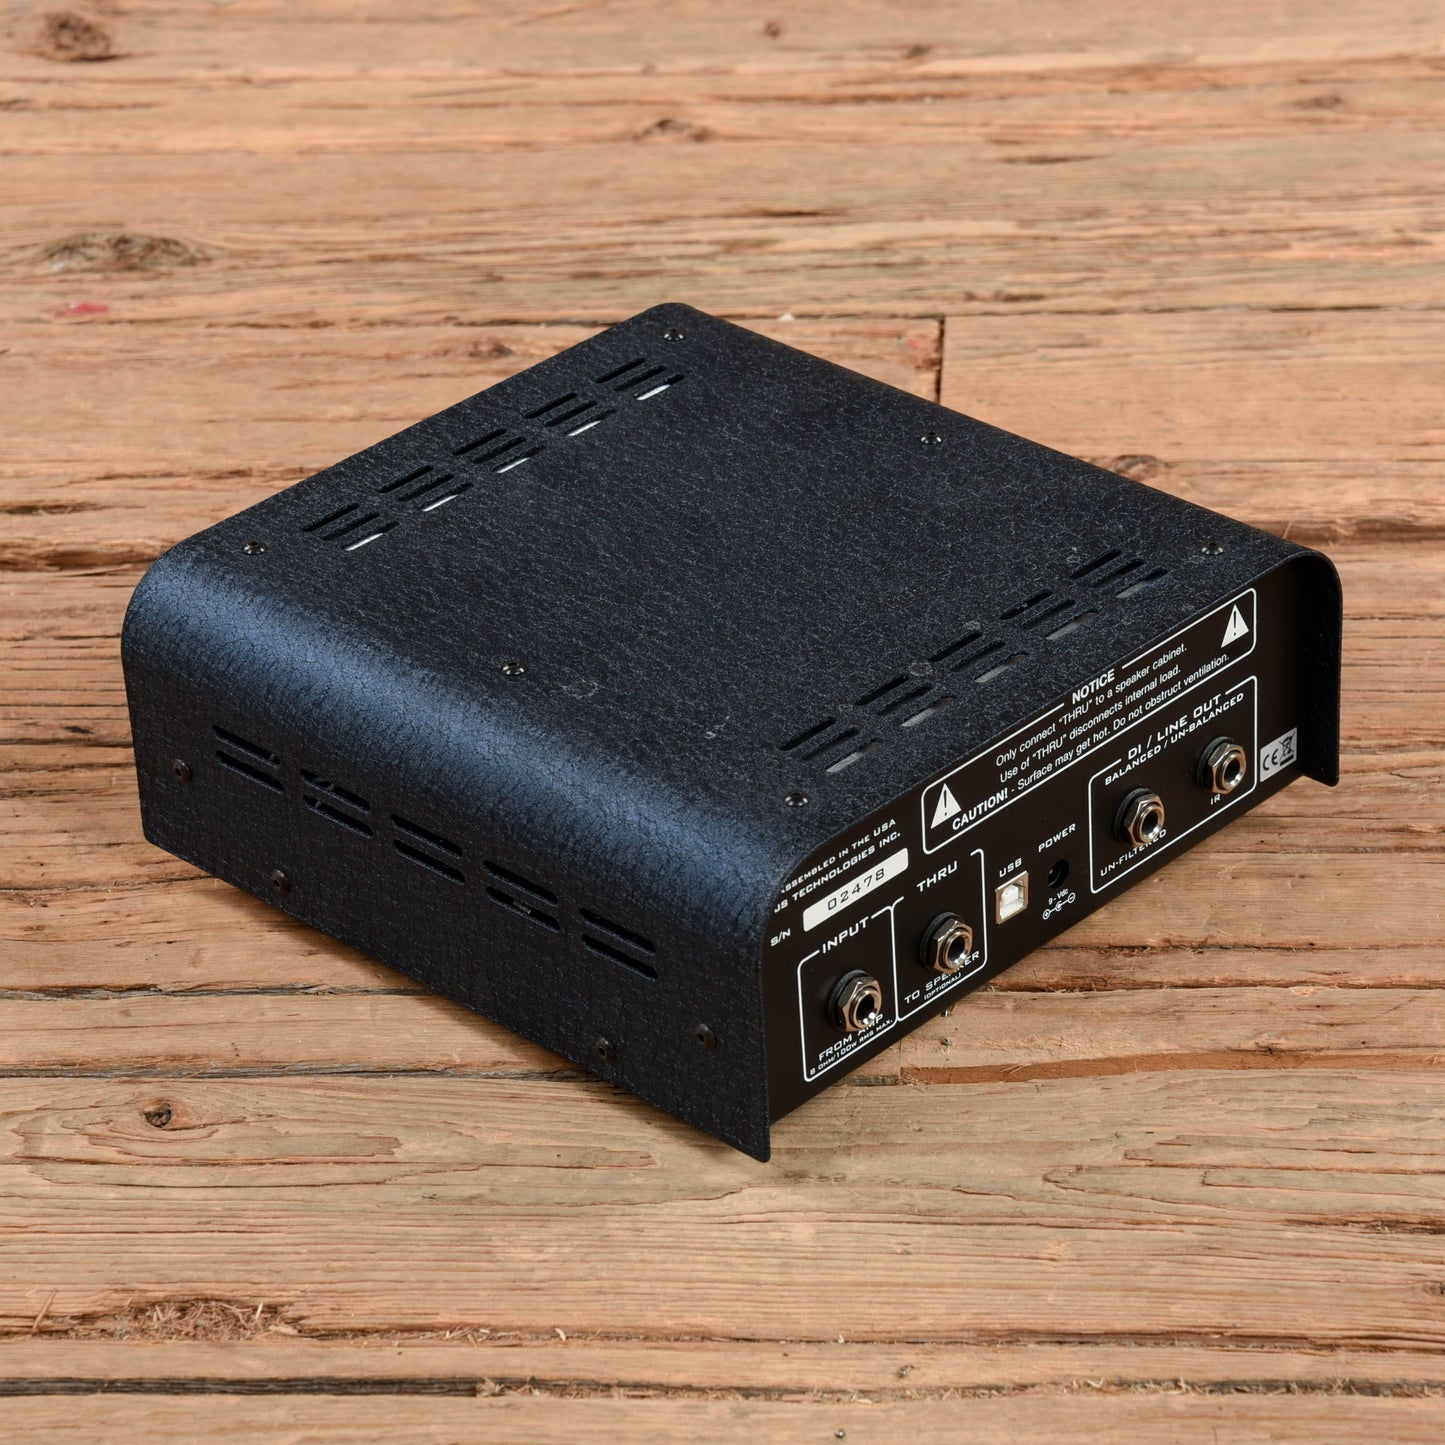 Suhr Reactive Load IR 8 Ohm DI Box with Impulse Responses Amps / Attenuators